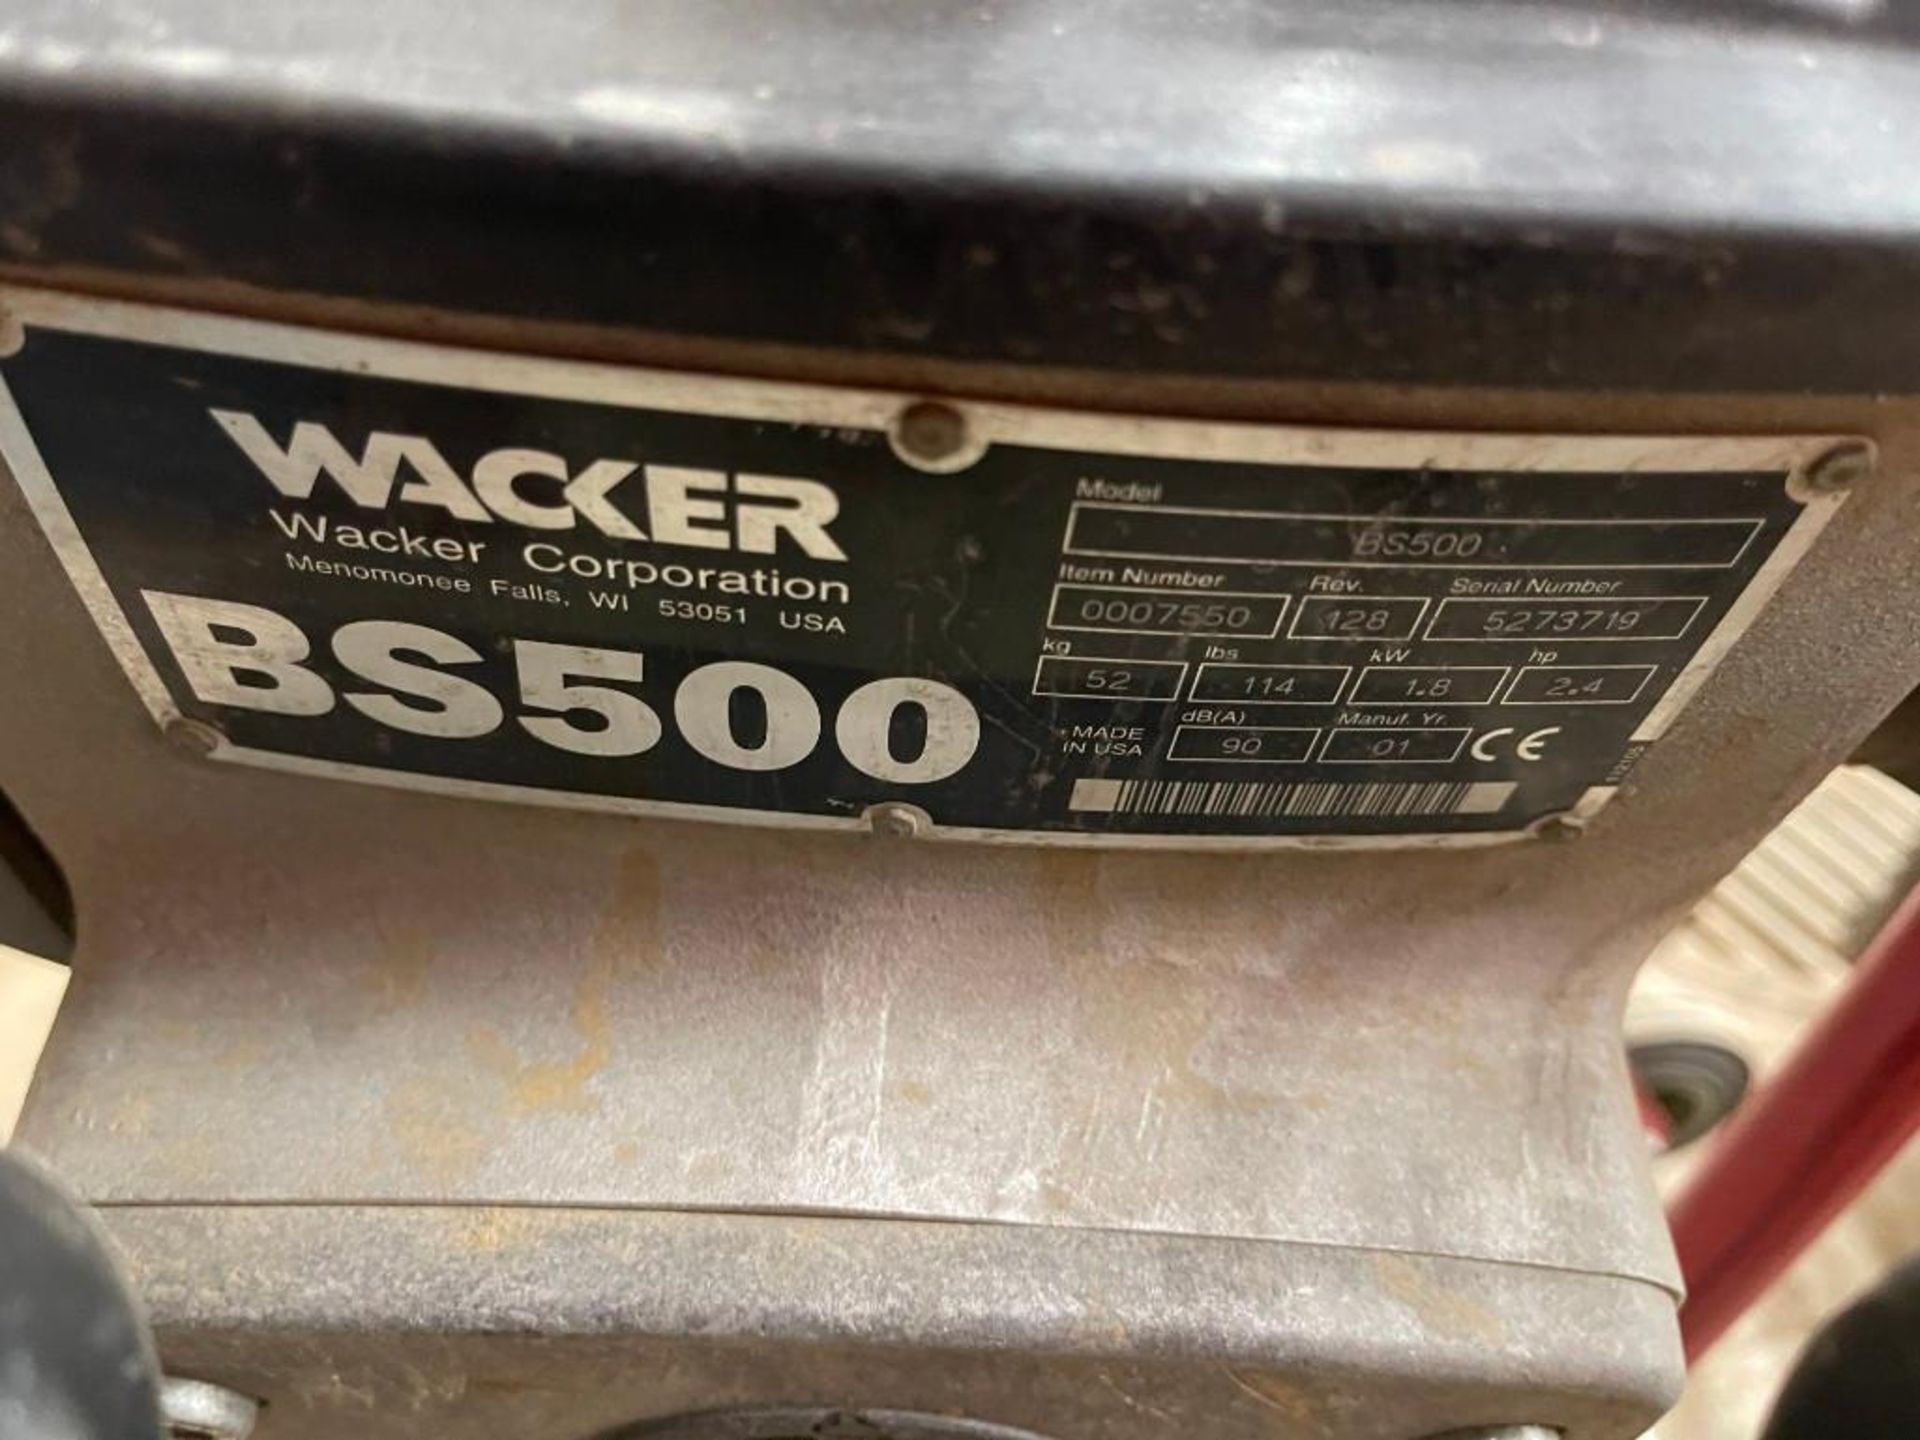 Wacker BS500 Rammer Compactor, S/N 5273719 - Image 2 of 3